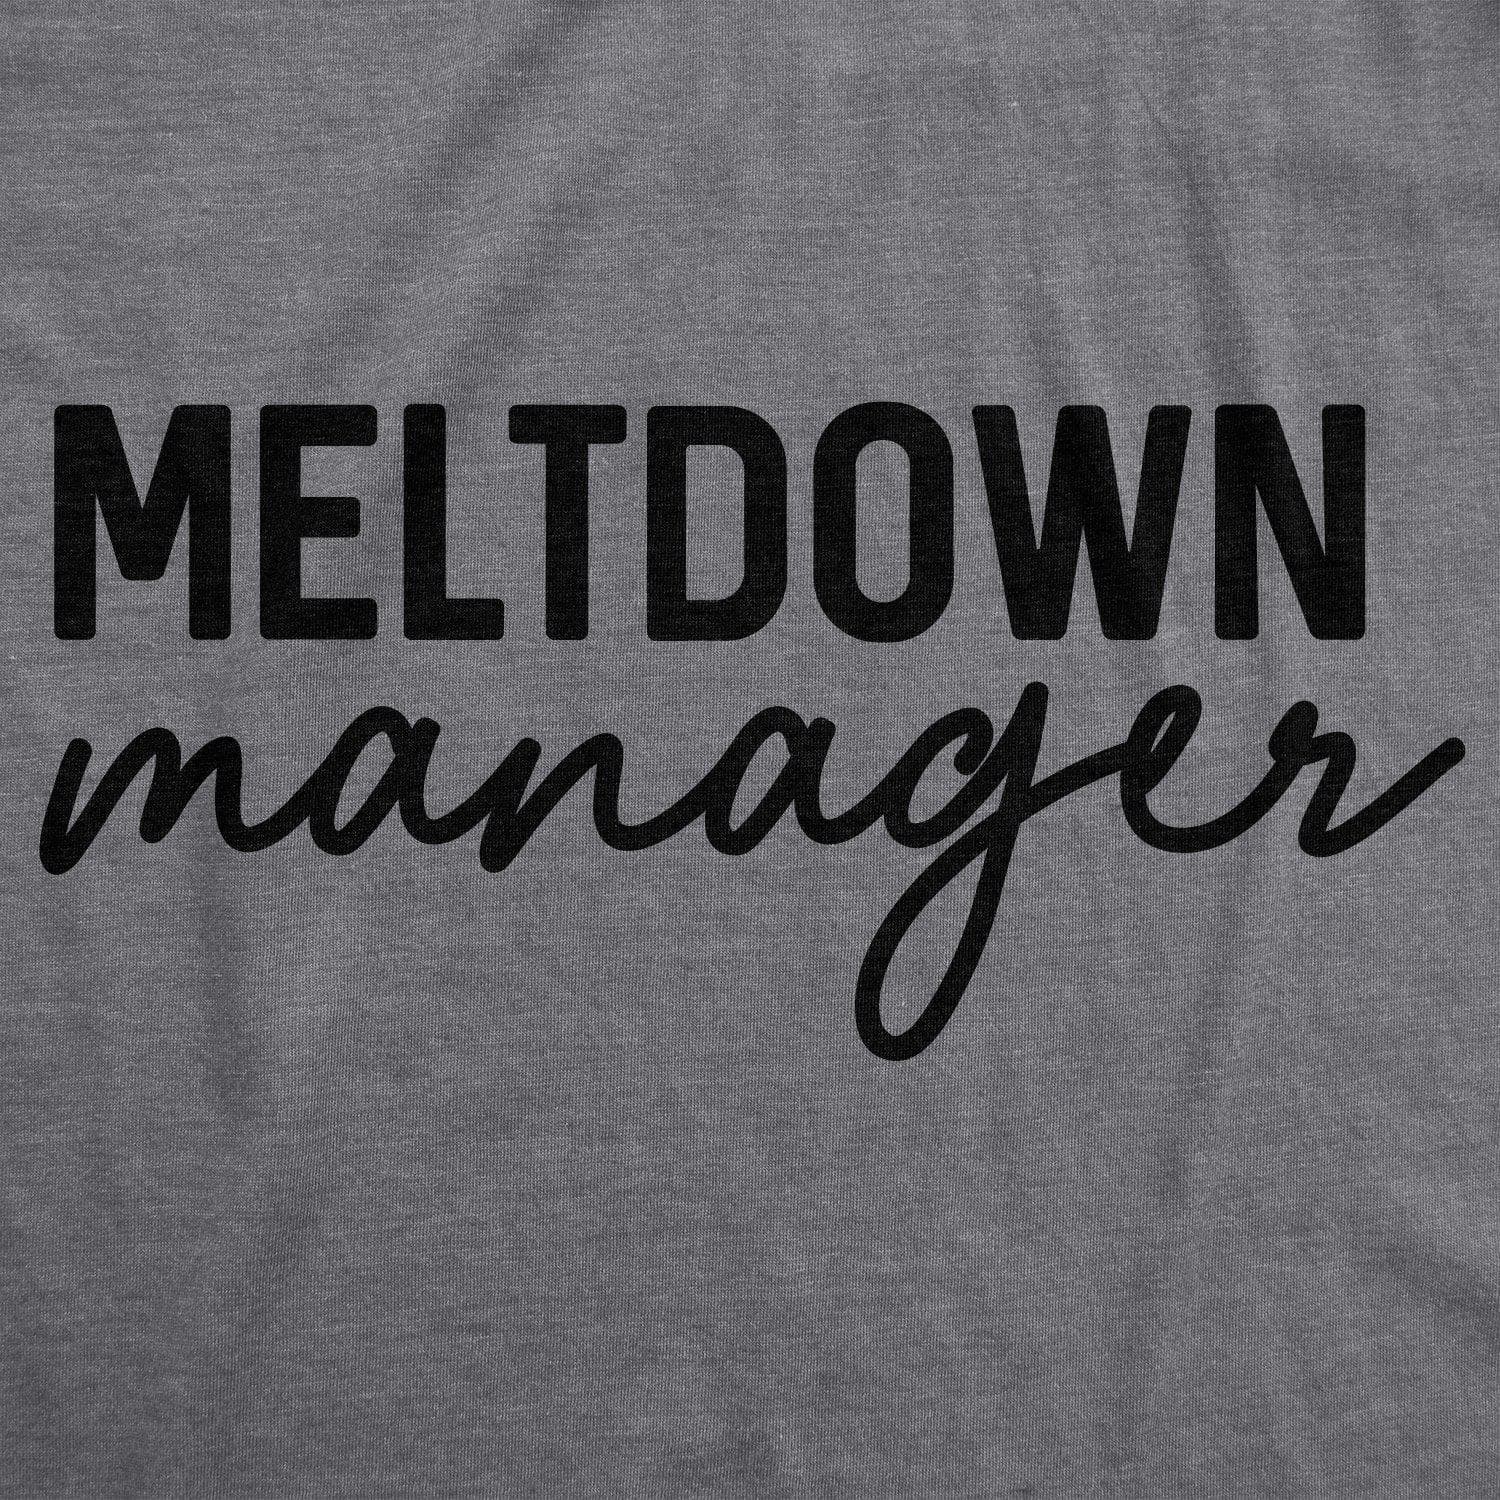 Meltdown Manager Women's Tshirt  -  Crazy Dog T-Shirts